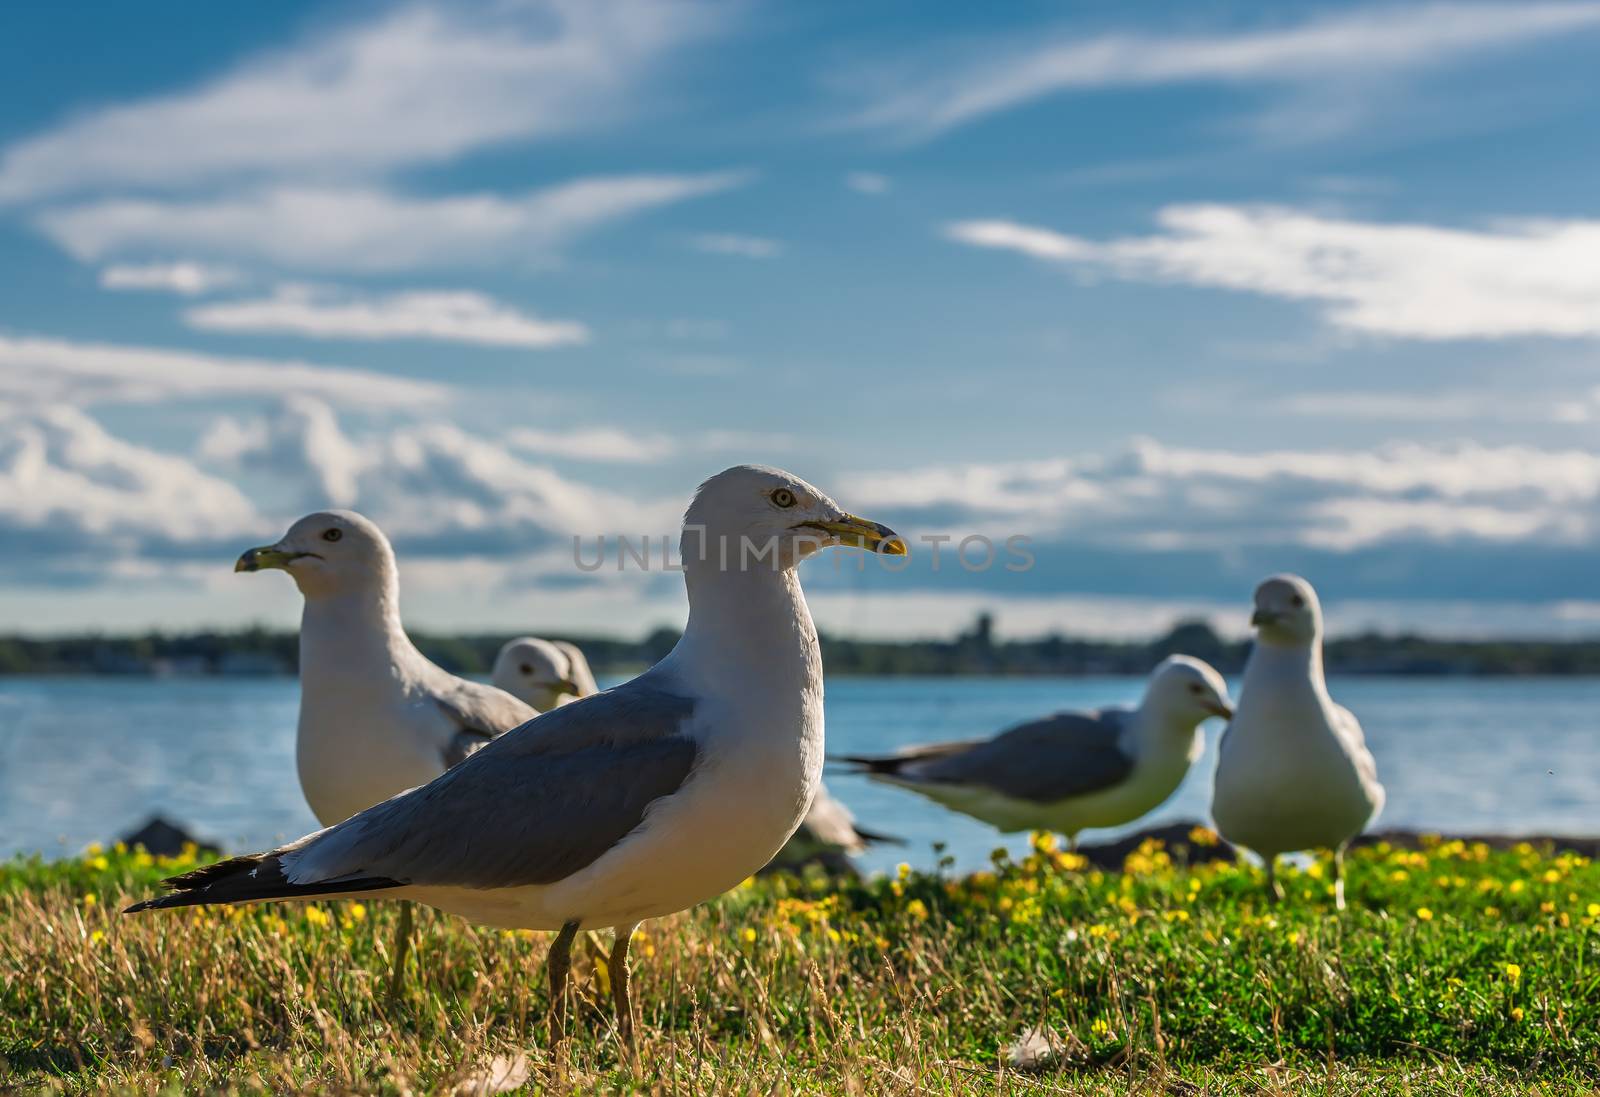 Amazing seagulls in the wild in Ontario, Canada.